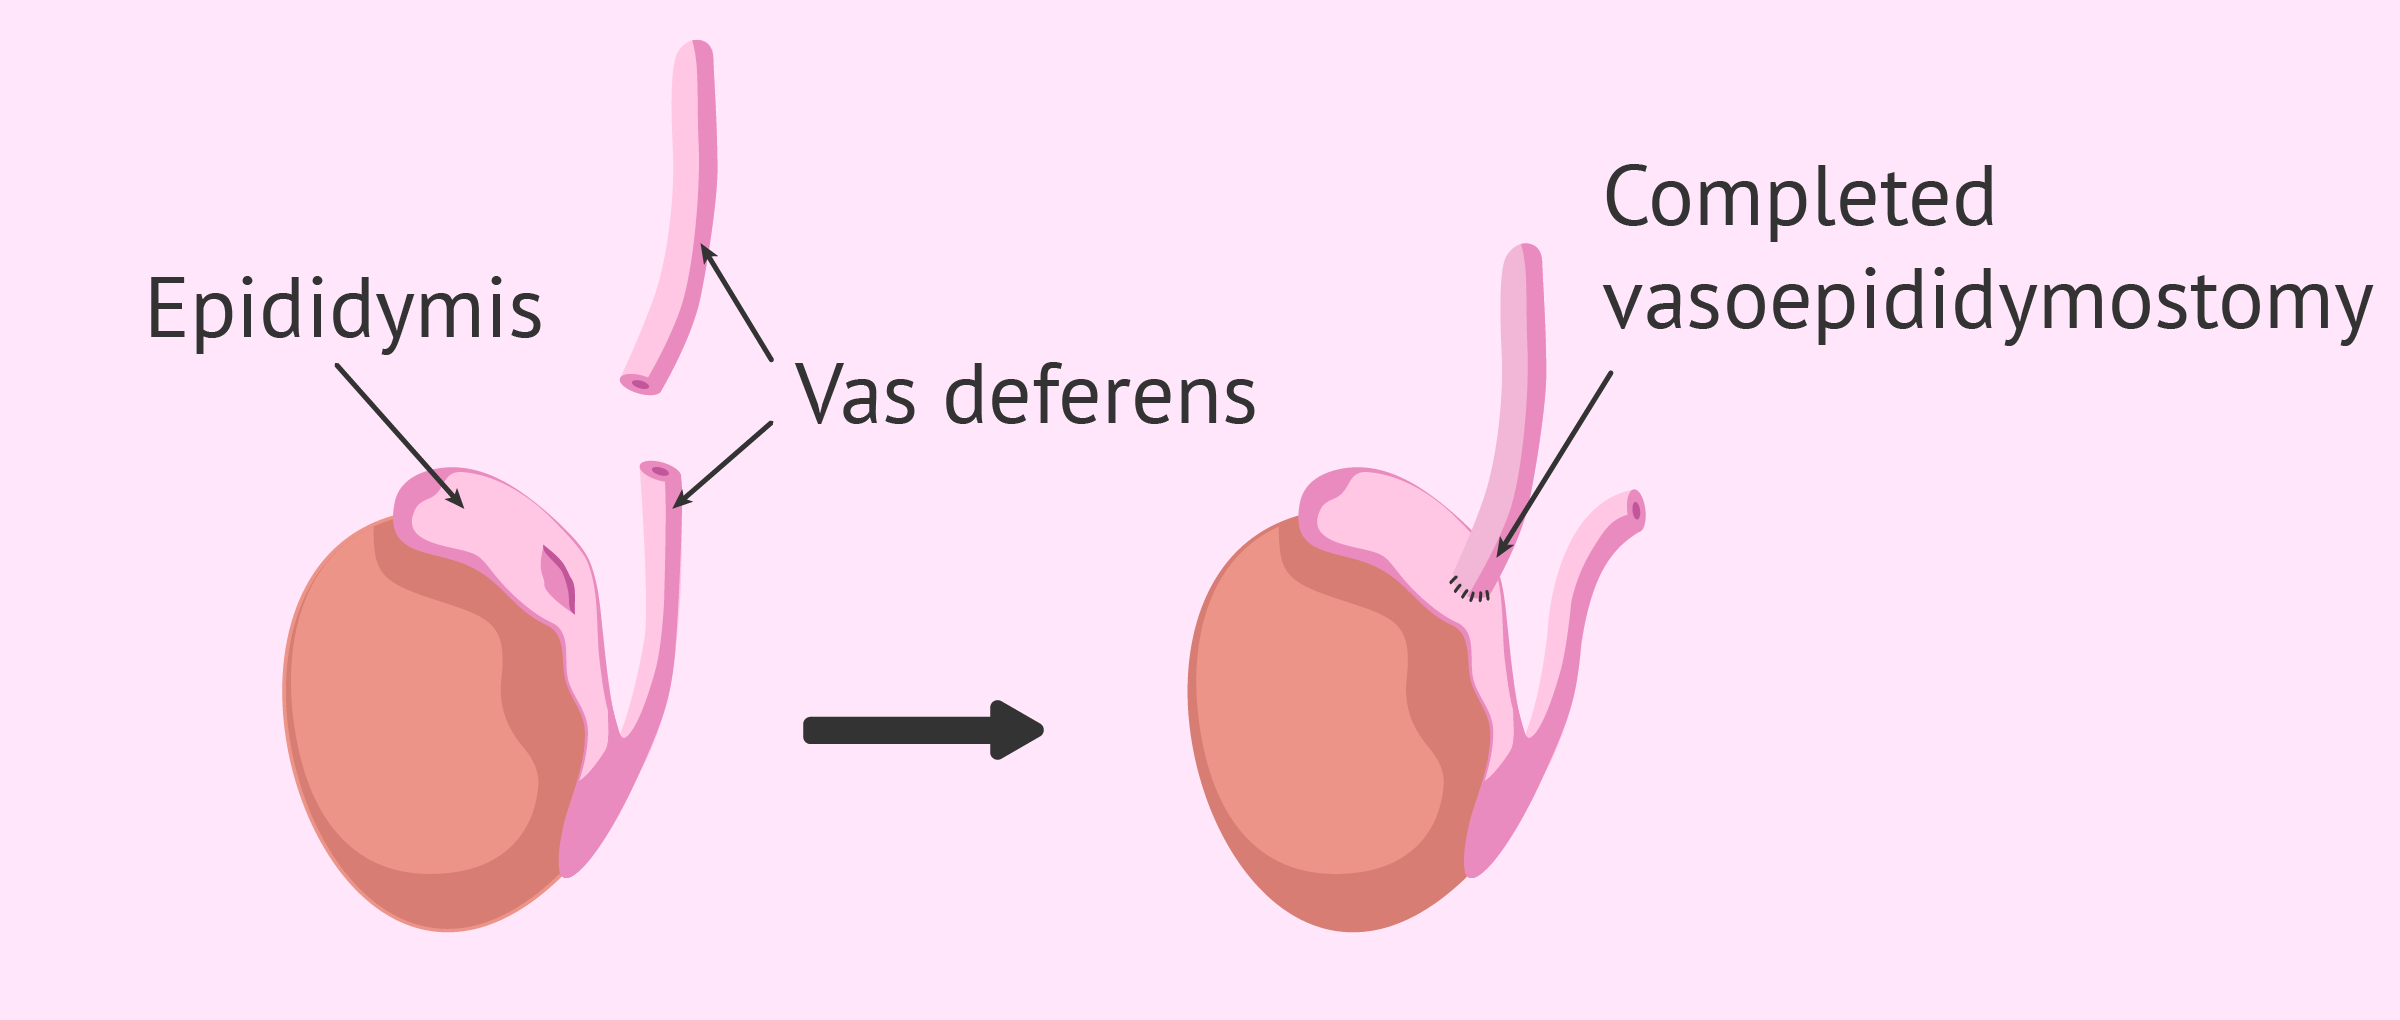 Process of vasoepididymostomy